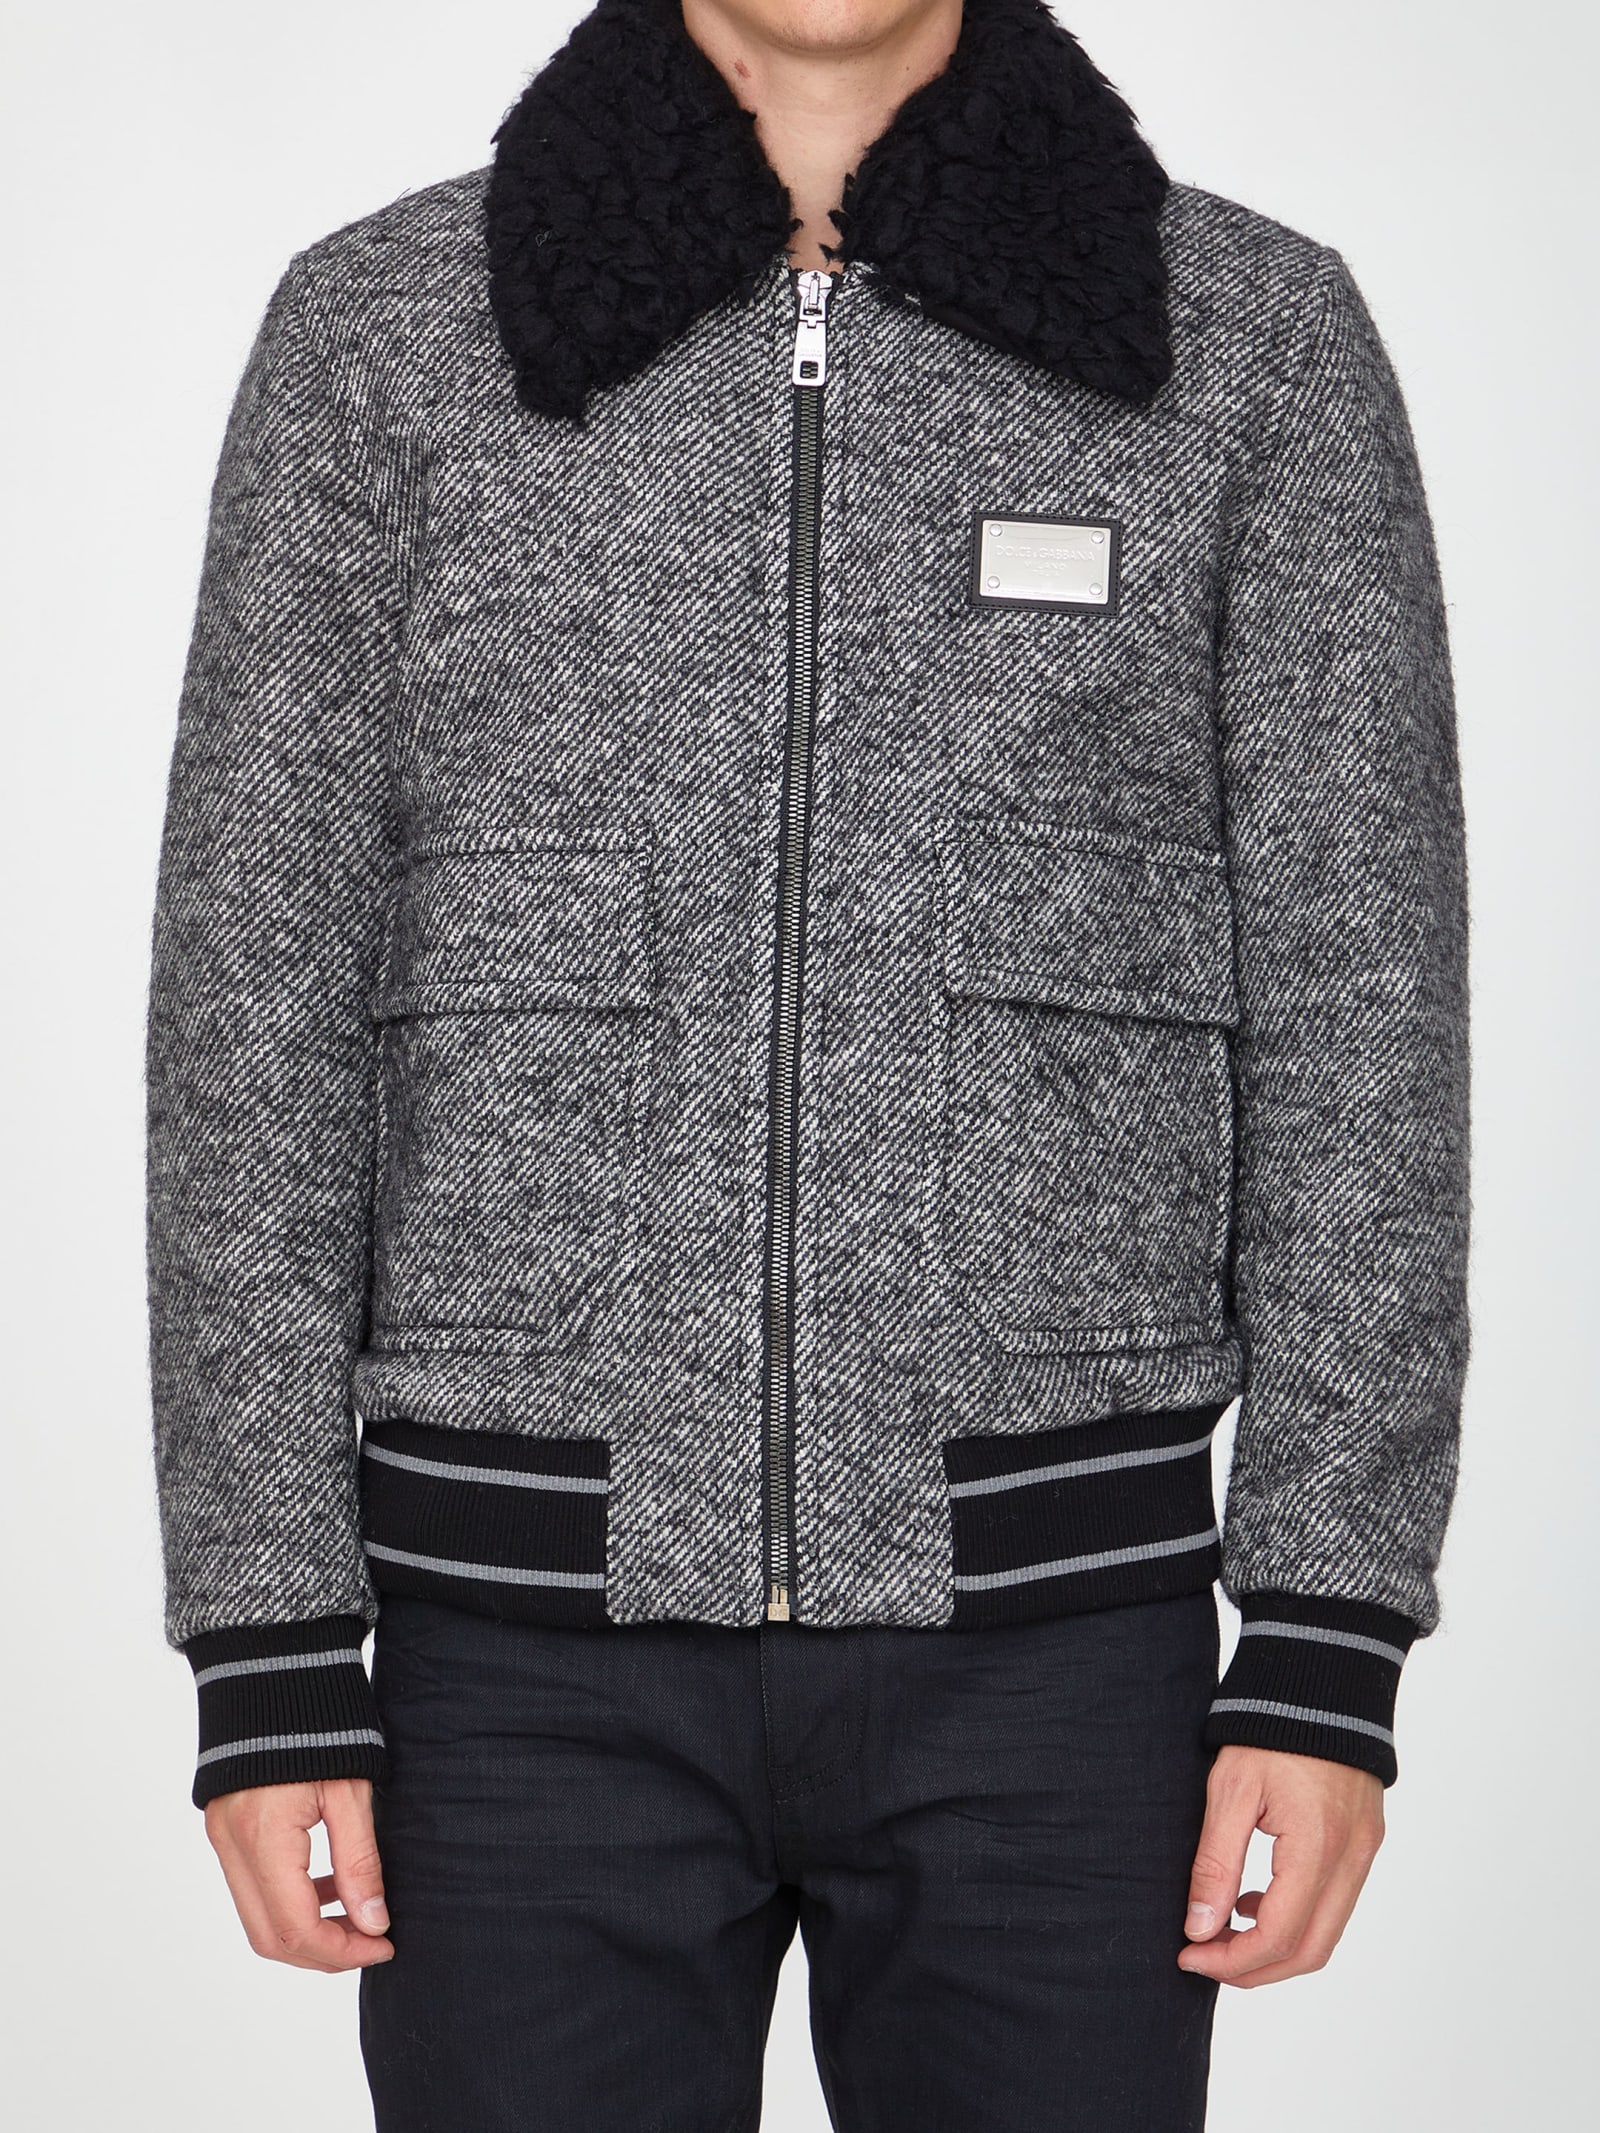 Dolce & Gabbana Wool Tweed Bomber Jacket